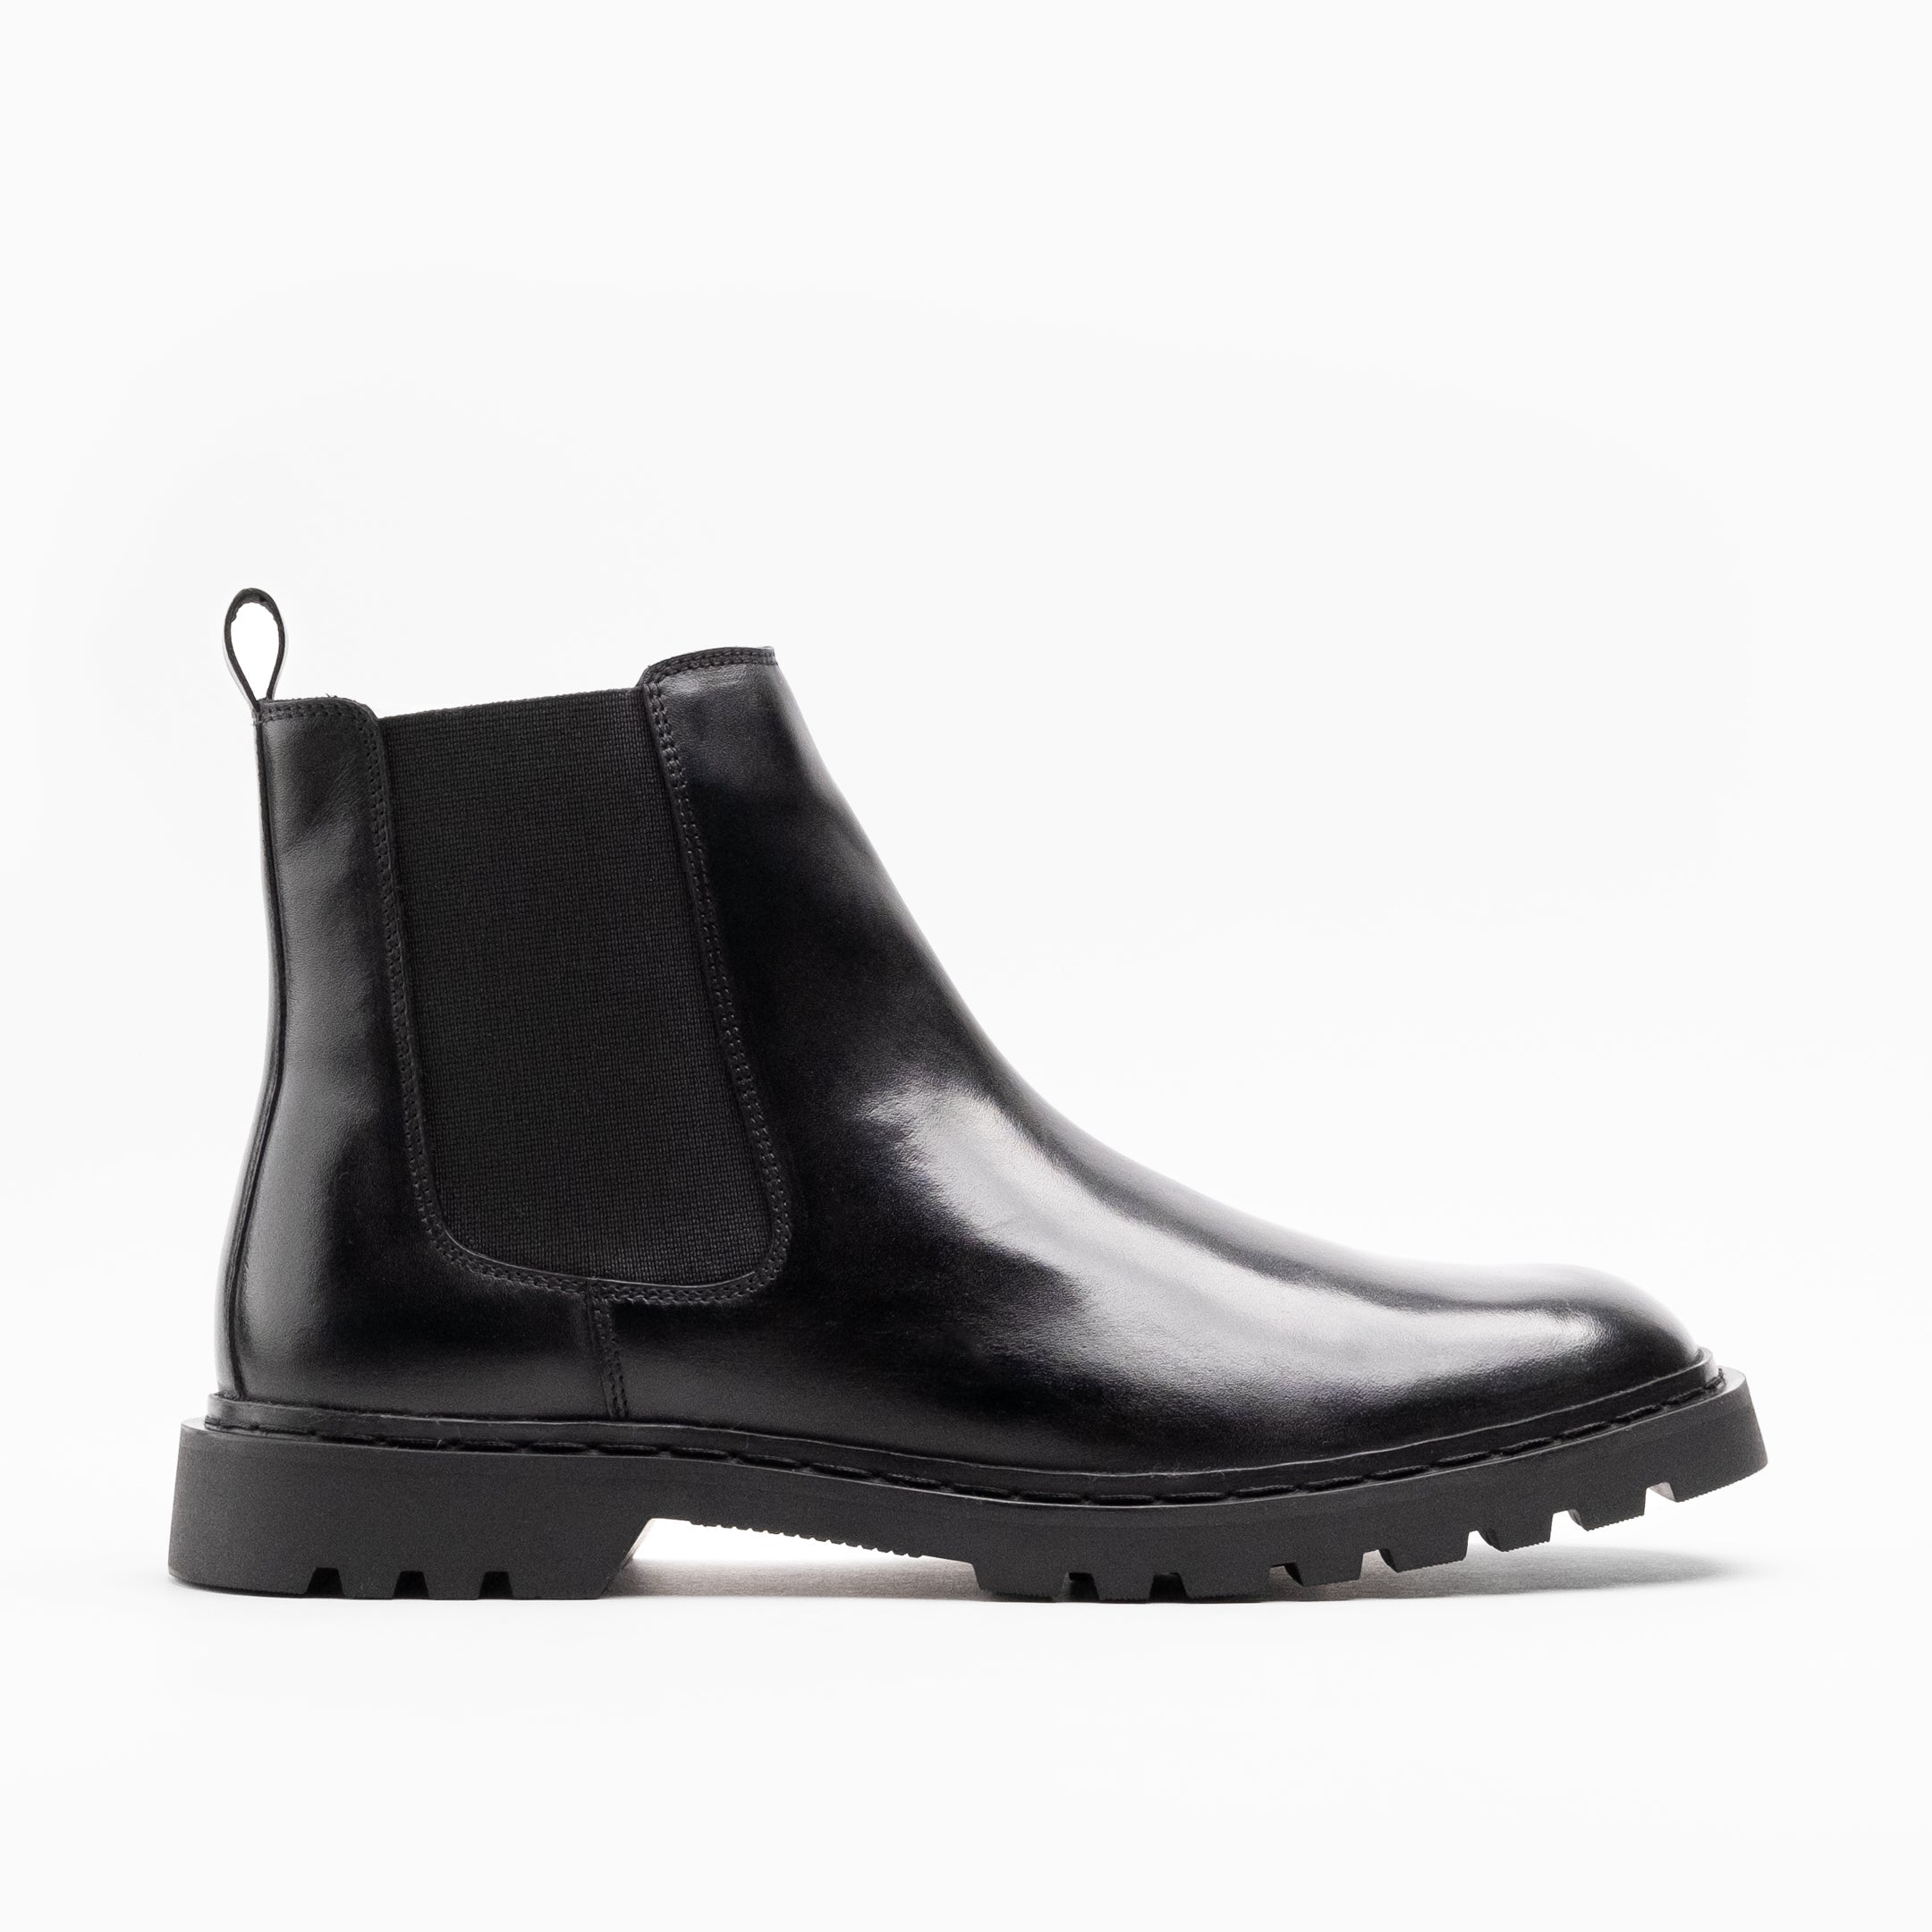 Walk London Mens Milano Chelsea Boot in Black Leather